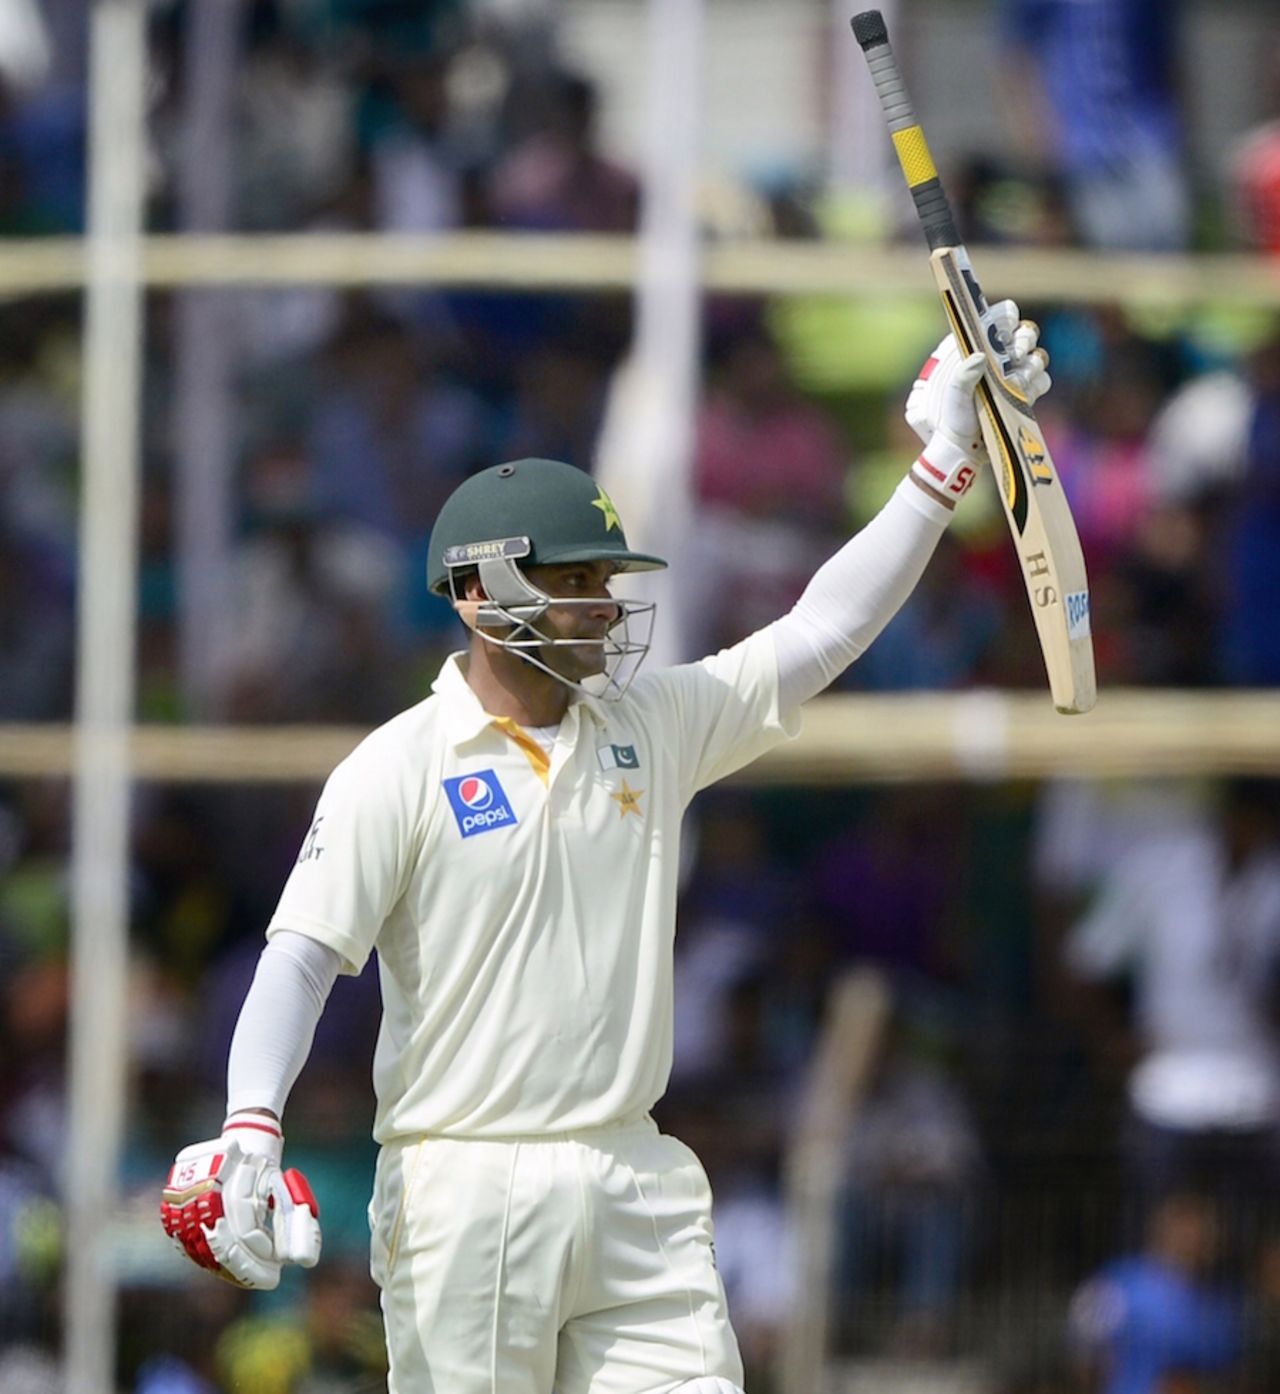 Mohammad Hafeez raises his bat after reaching his half-century, Bangladesh v Pakistan, 1st Test, Khulna, 2nd day, April 29, 2015